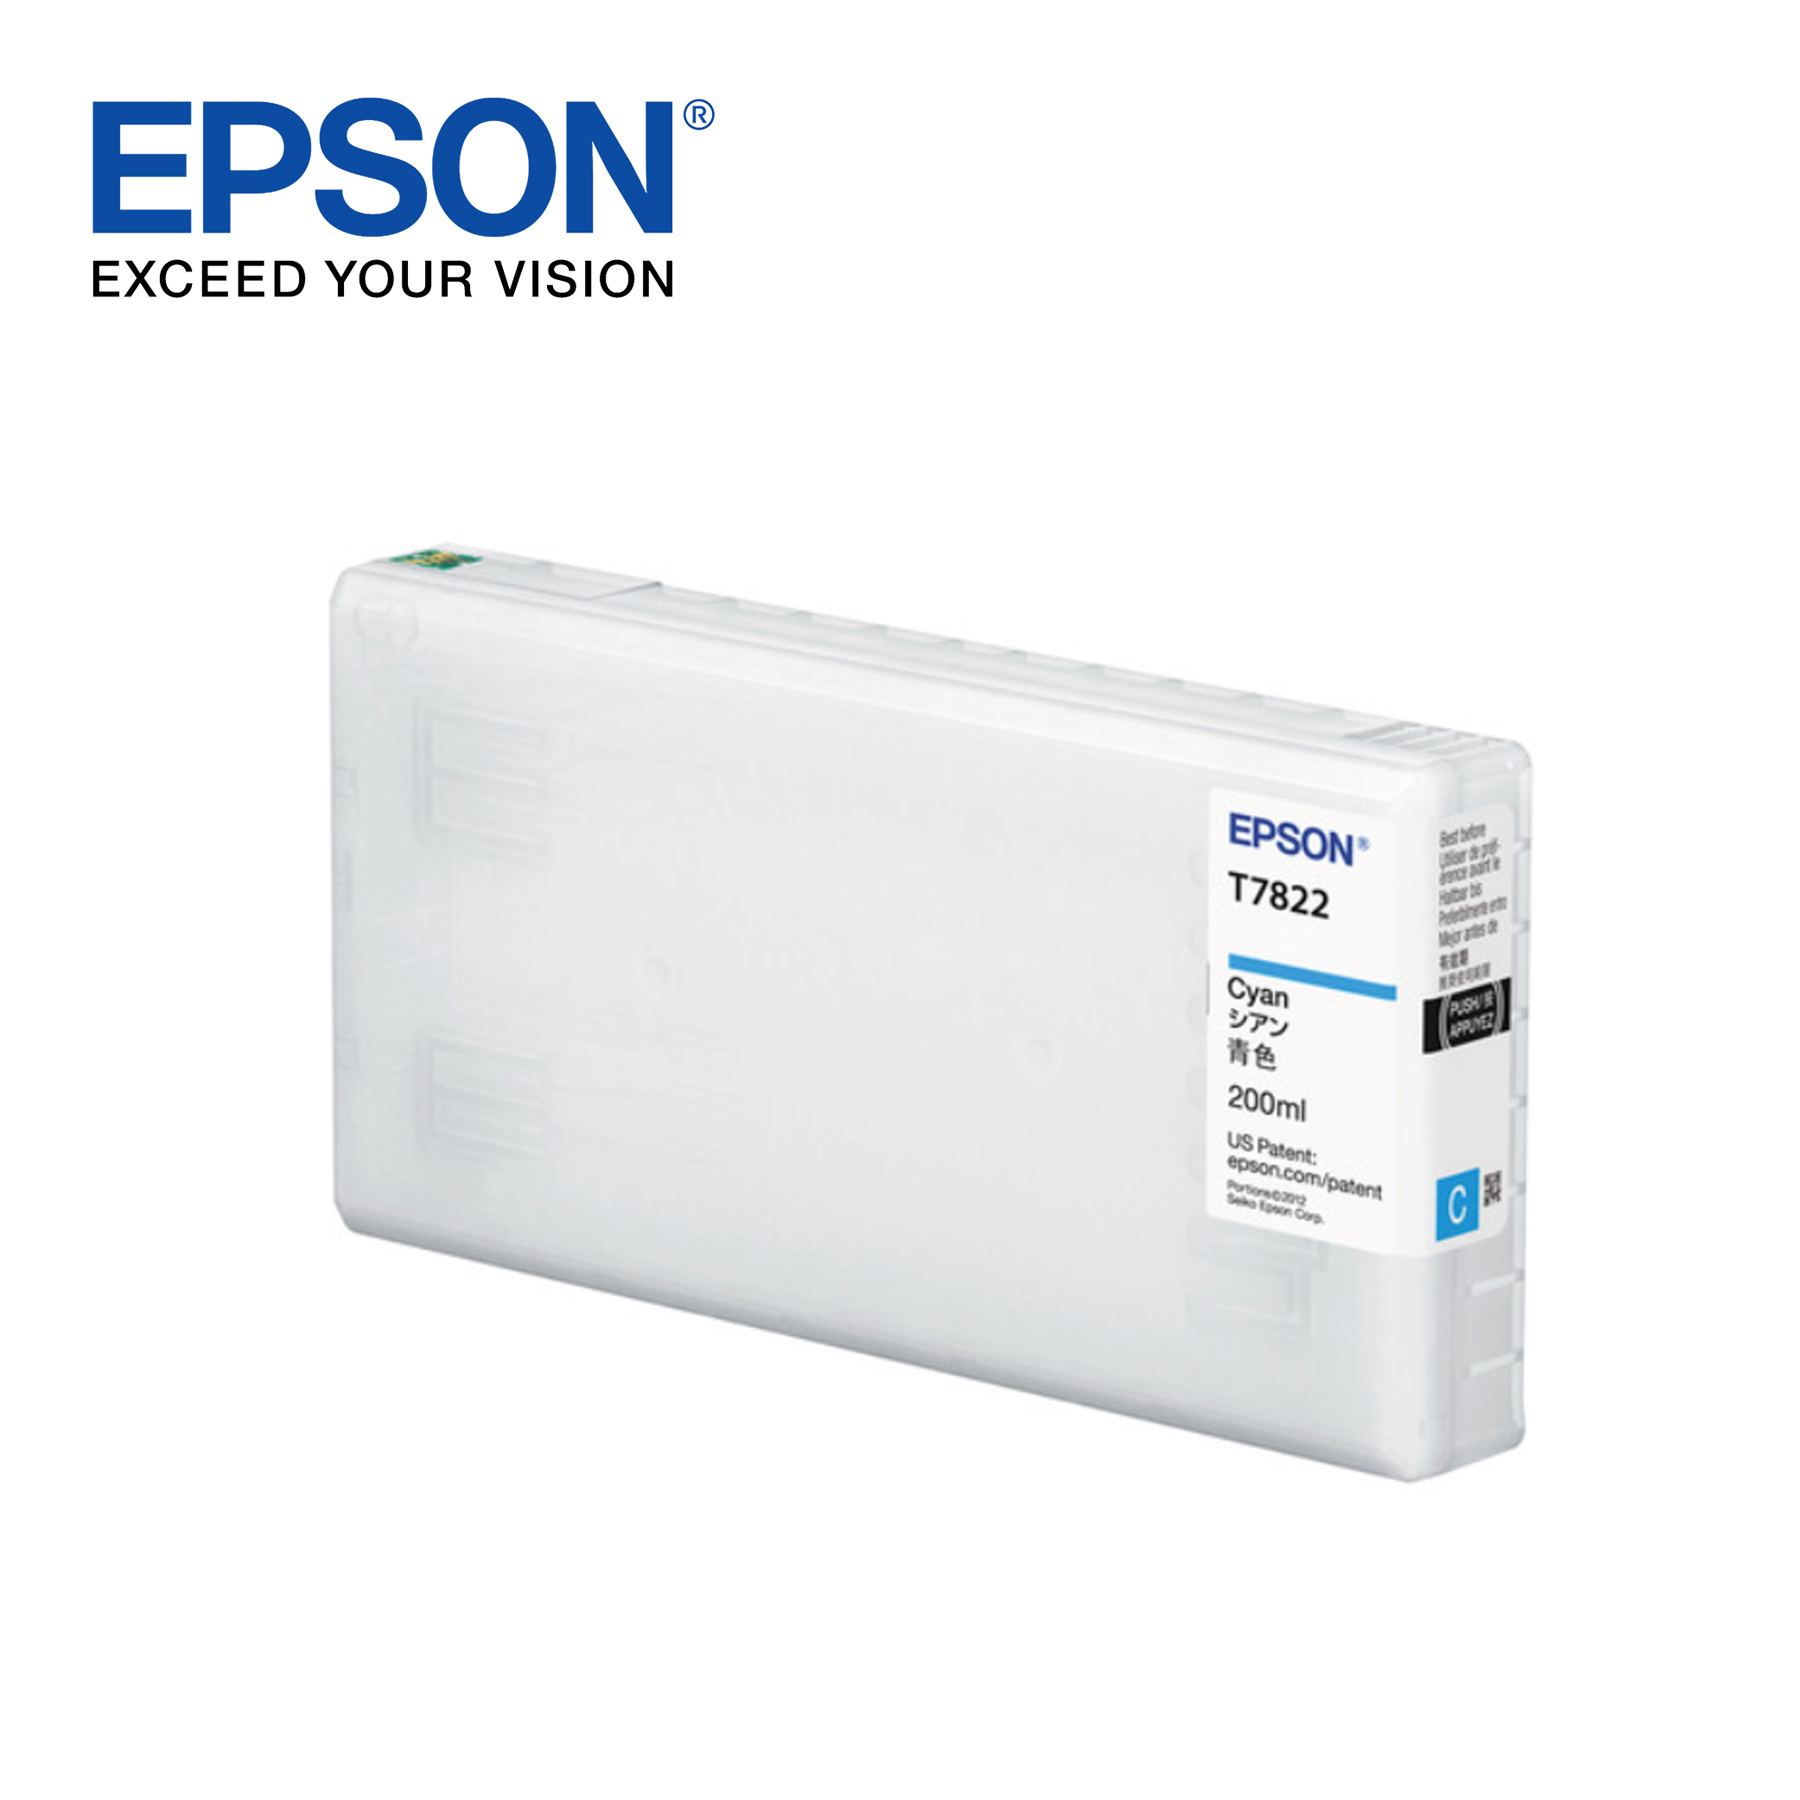 Epson Ink Cartridge for Surelab SL-D700 Photo Printer – Cyan